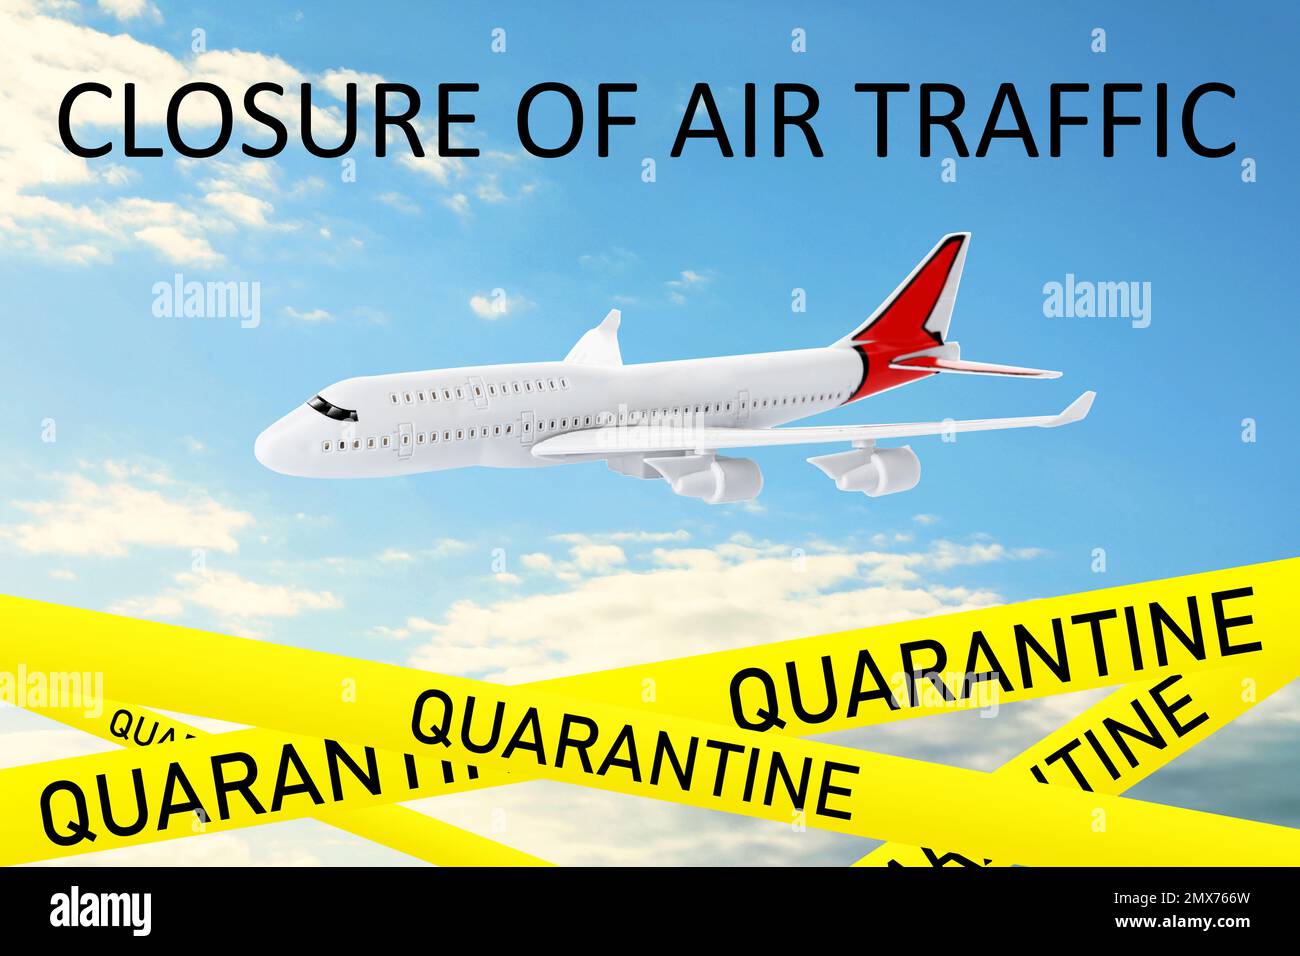 Closure of air traffic through quarantine during coronavirus outbreak. Airplane in blue sky and yellow awareness ribbons Stock Photo